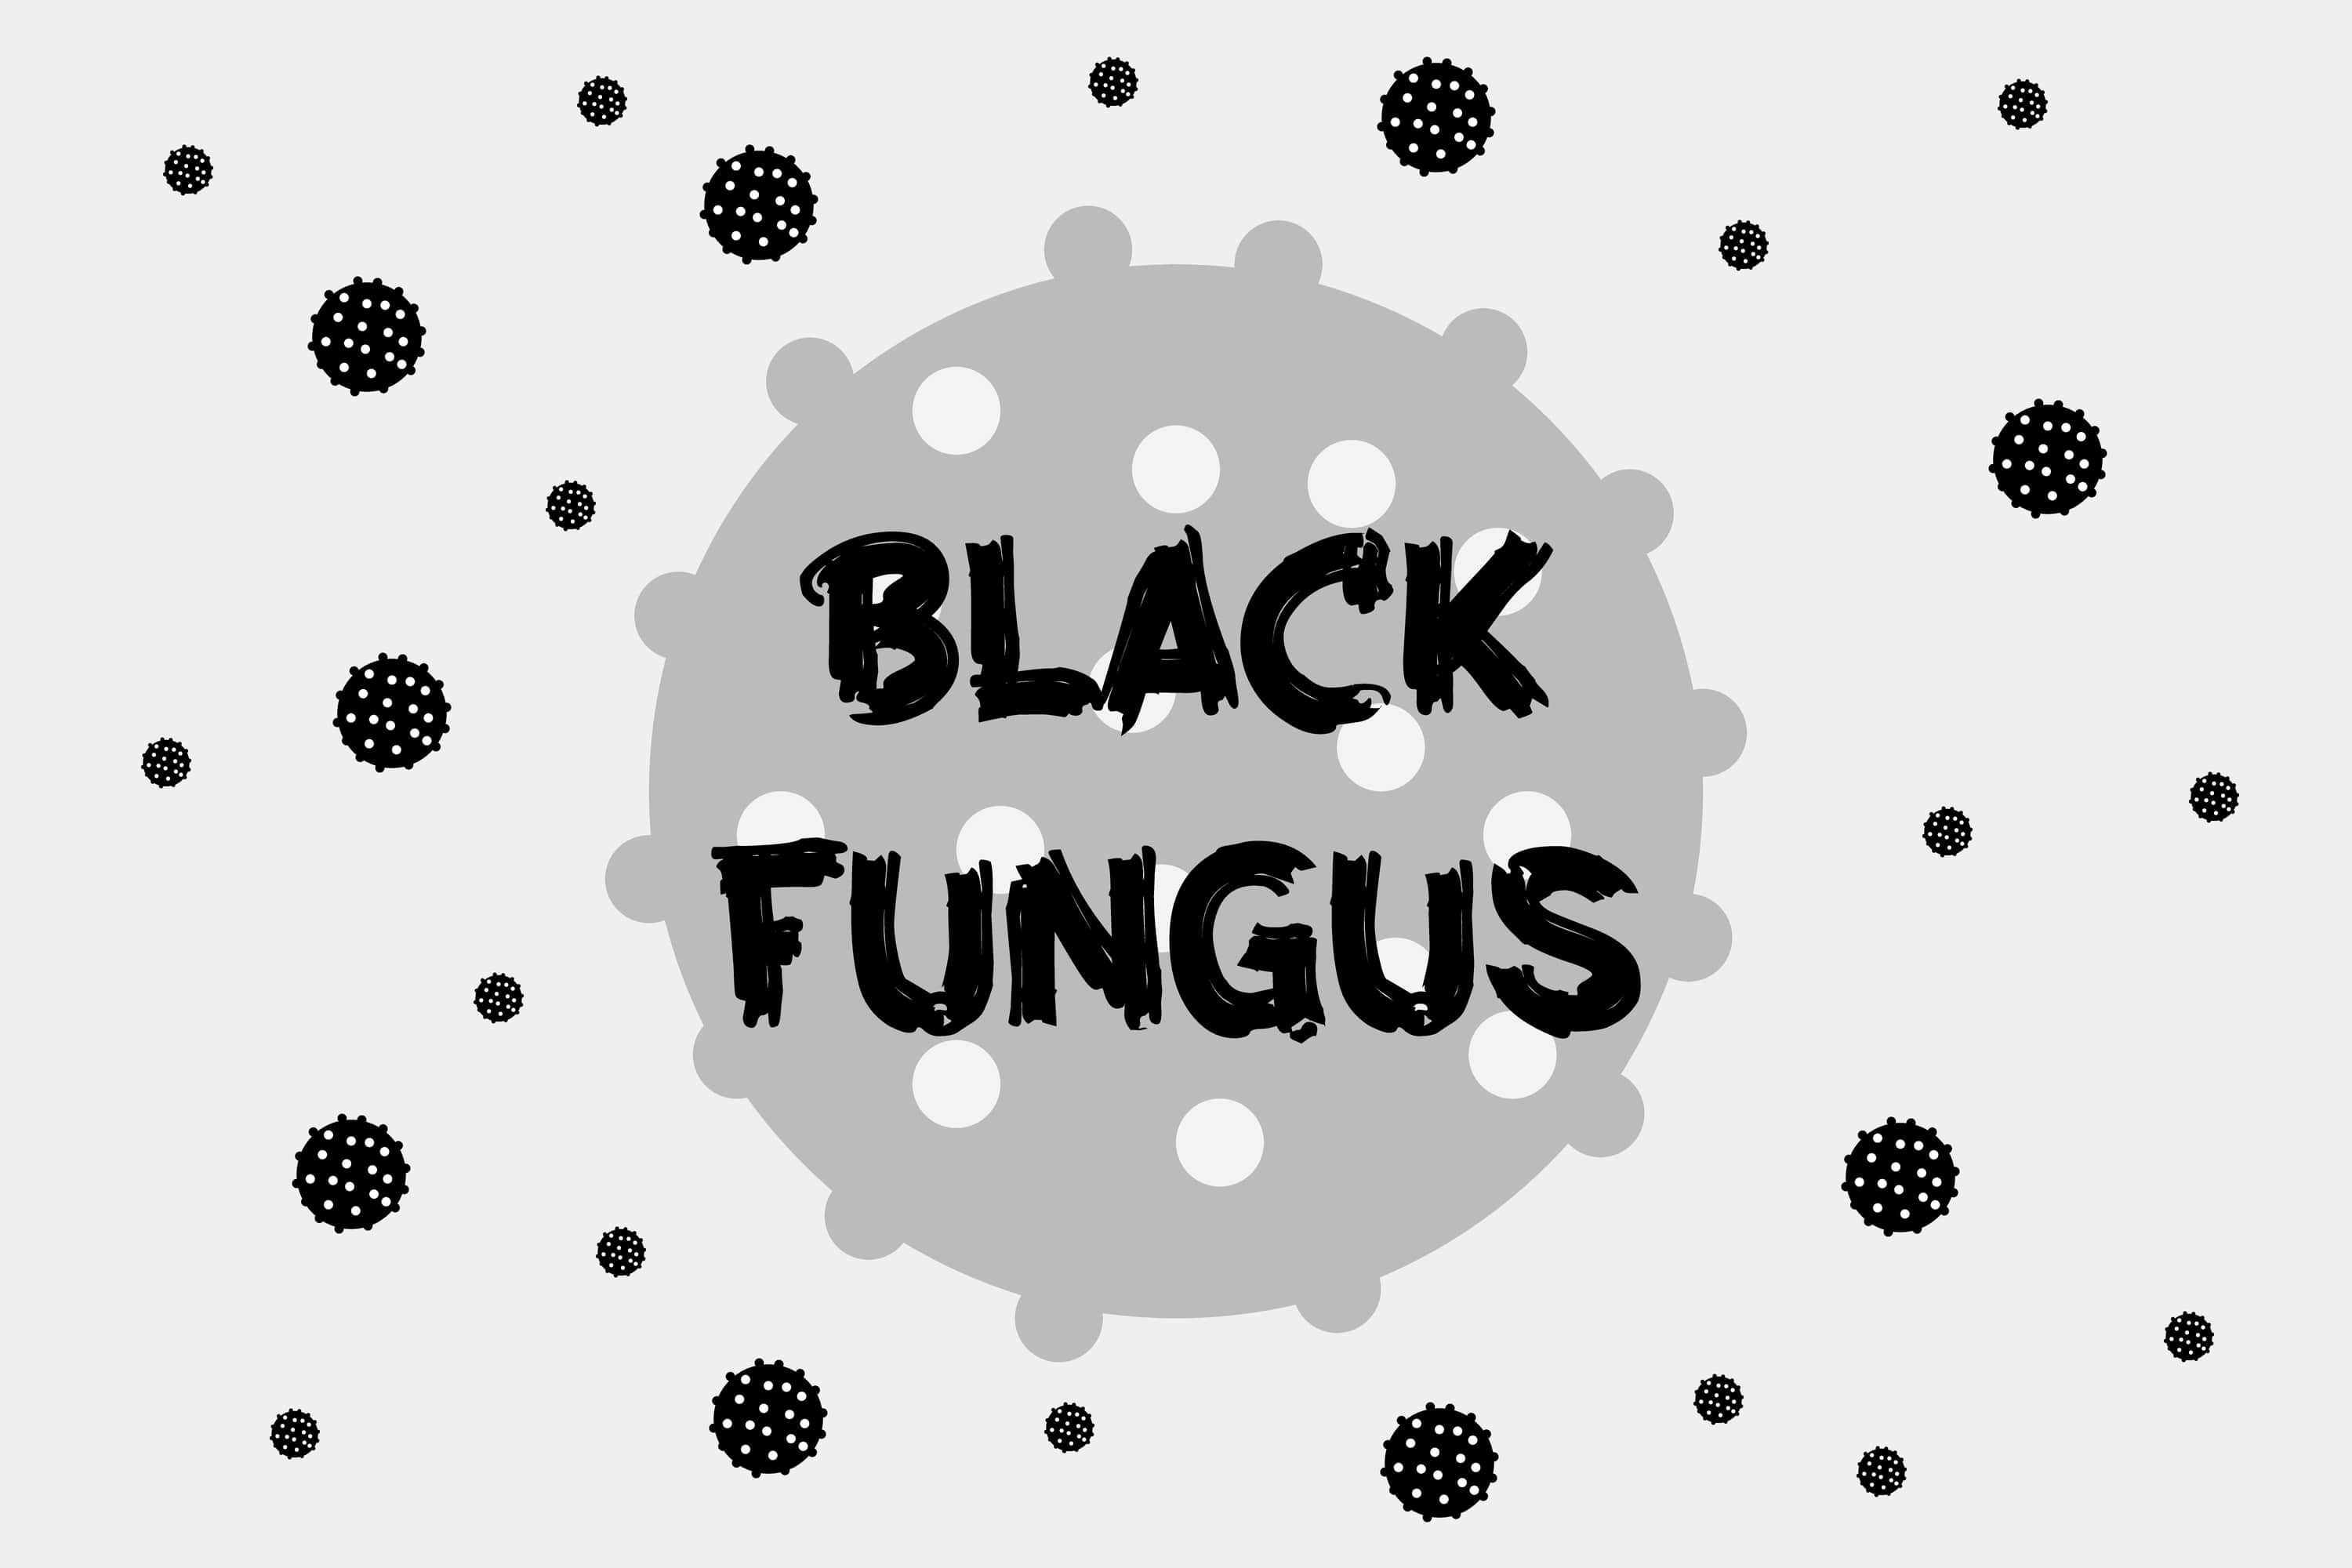 Black Fungus’ or medically ‘Mucormycosis’